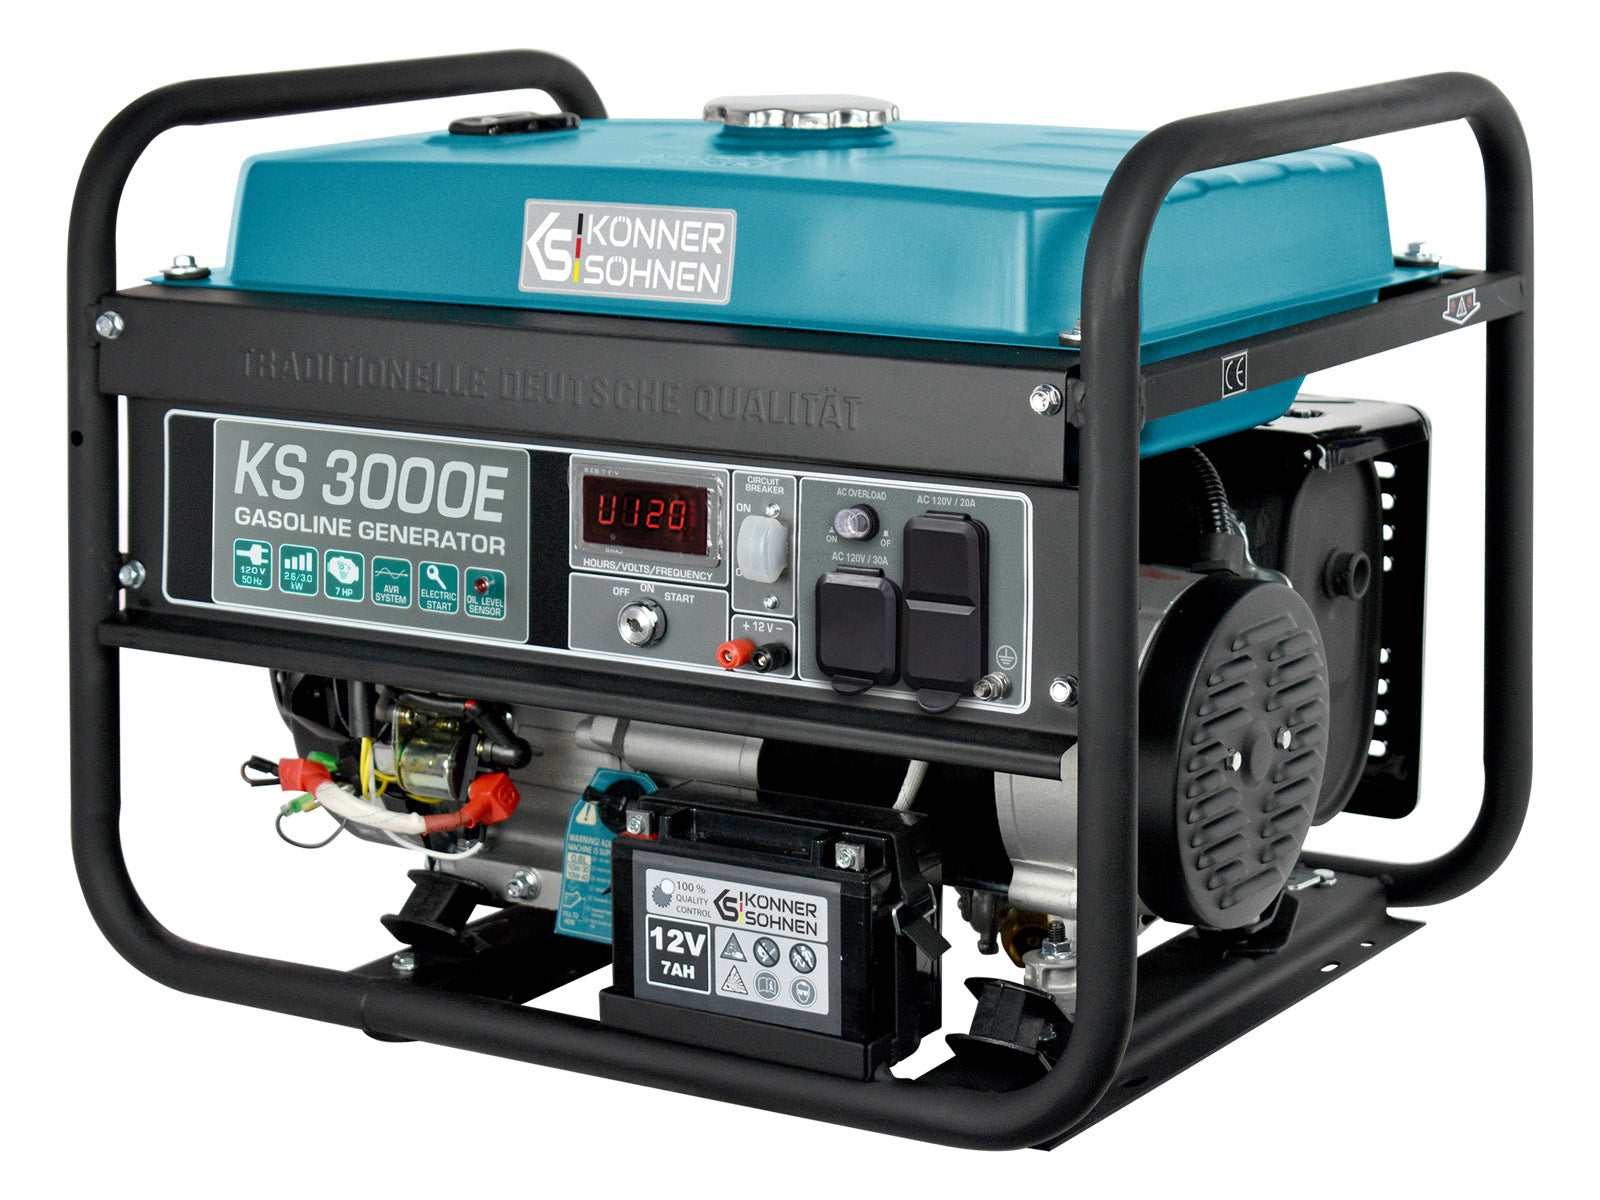 Gasoline generator KS 3000E